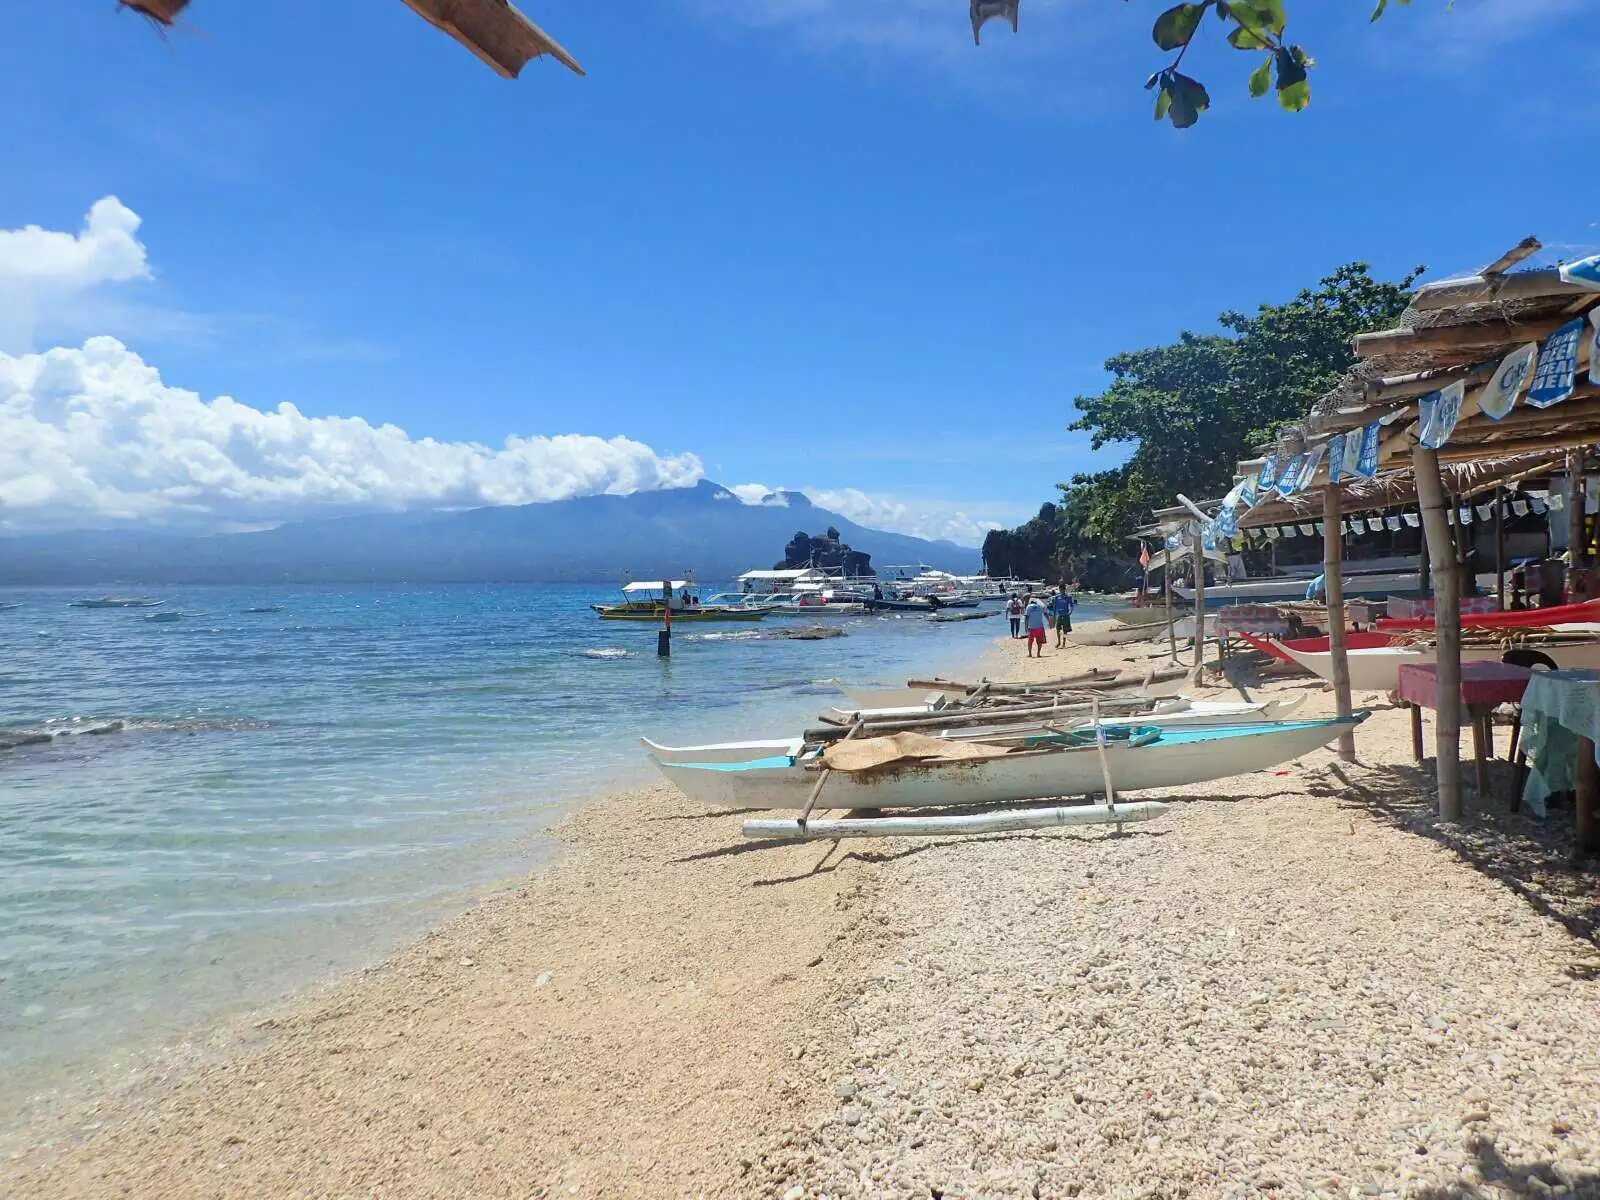 Manila/Luzon-Diving destinations: Free travel to Manila, Dumaguete, and Dauin, Philippines